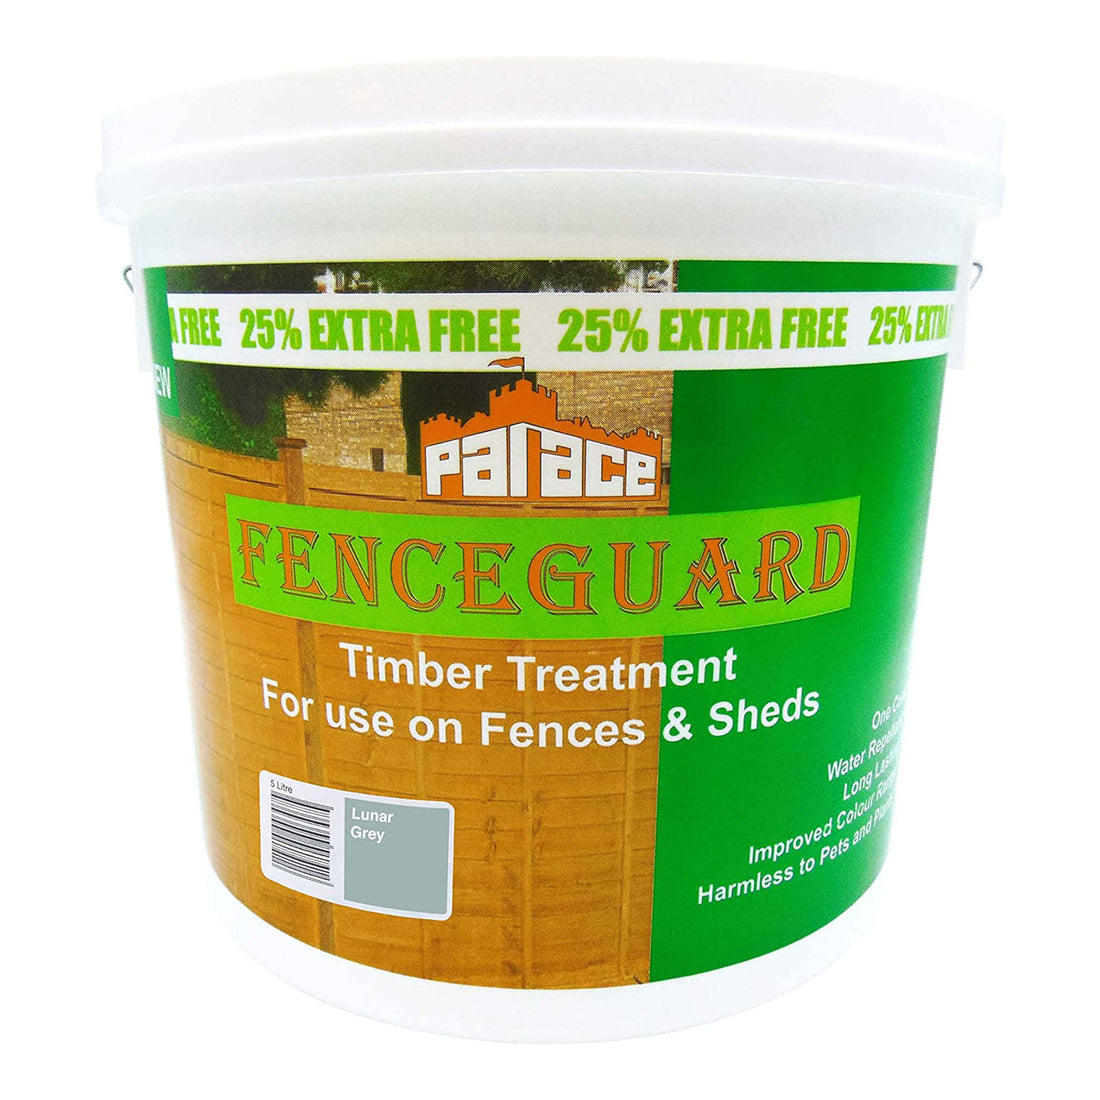 Fenceguard Paint Timber Treatment 5 Litre | Lunar Grey